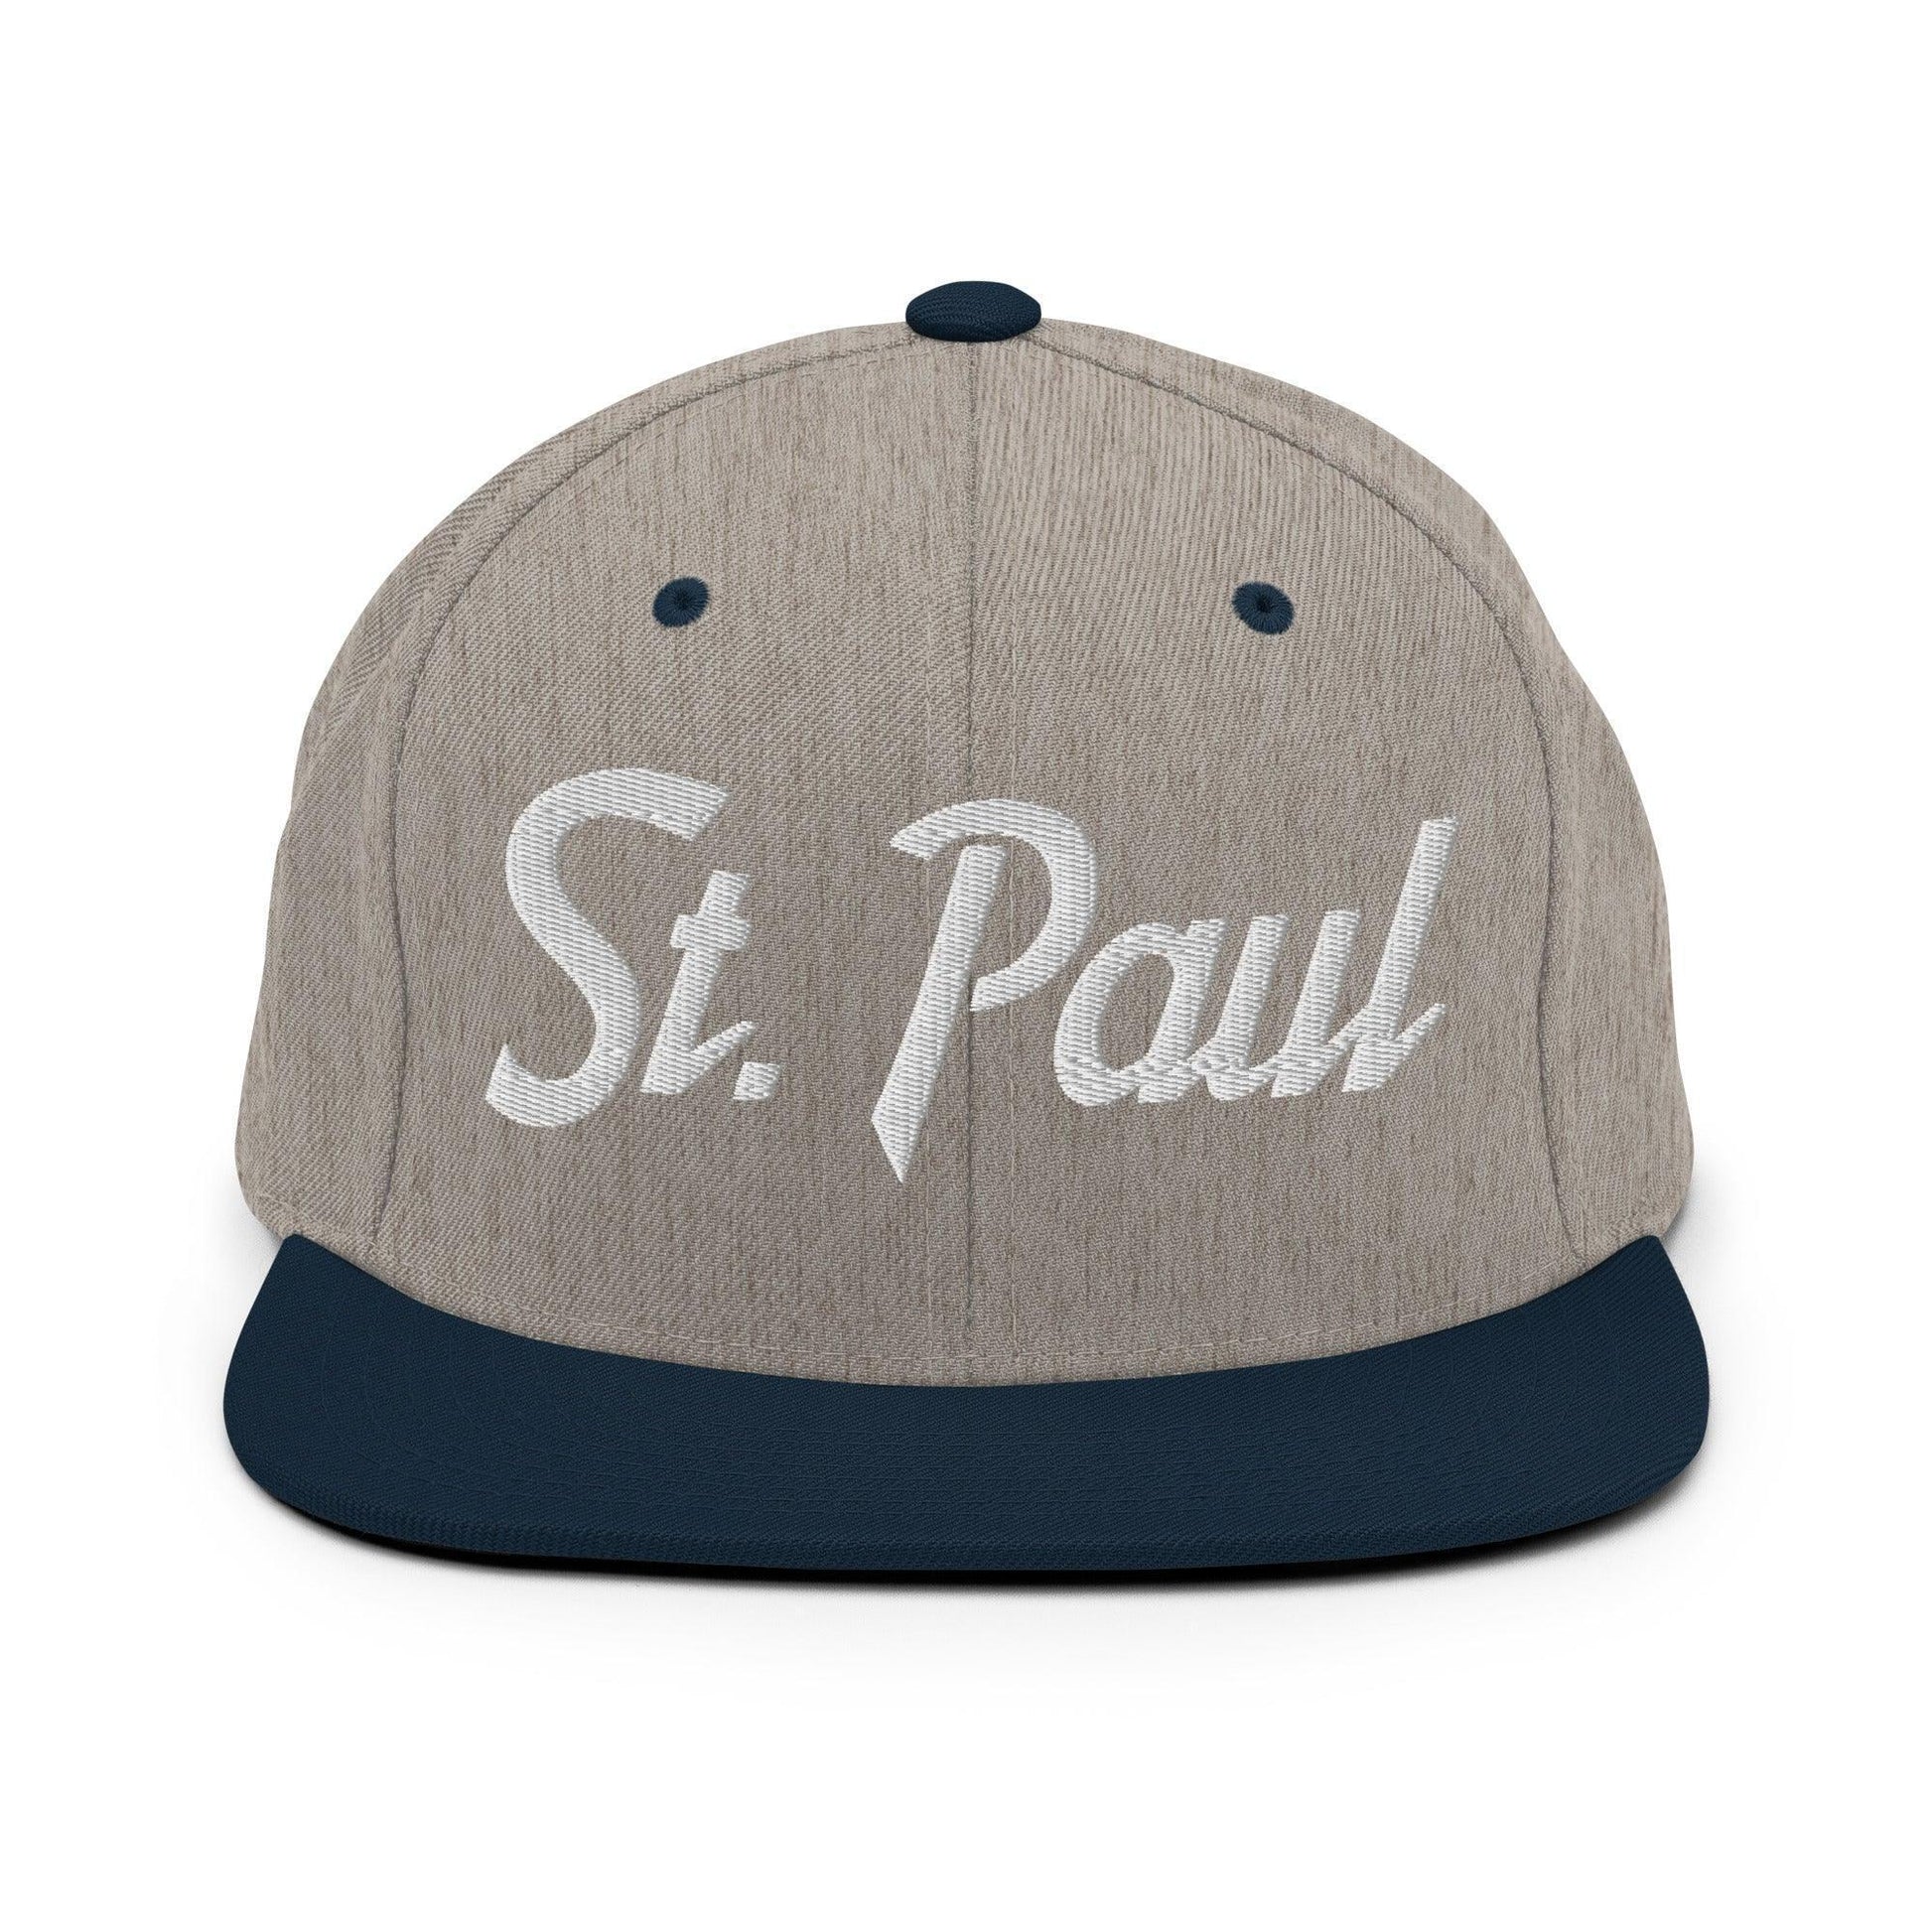 St. Paul Script Snapback Hat Heather Grey/ Navy